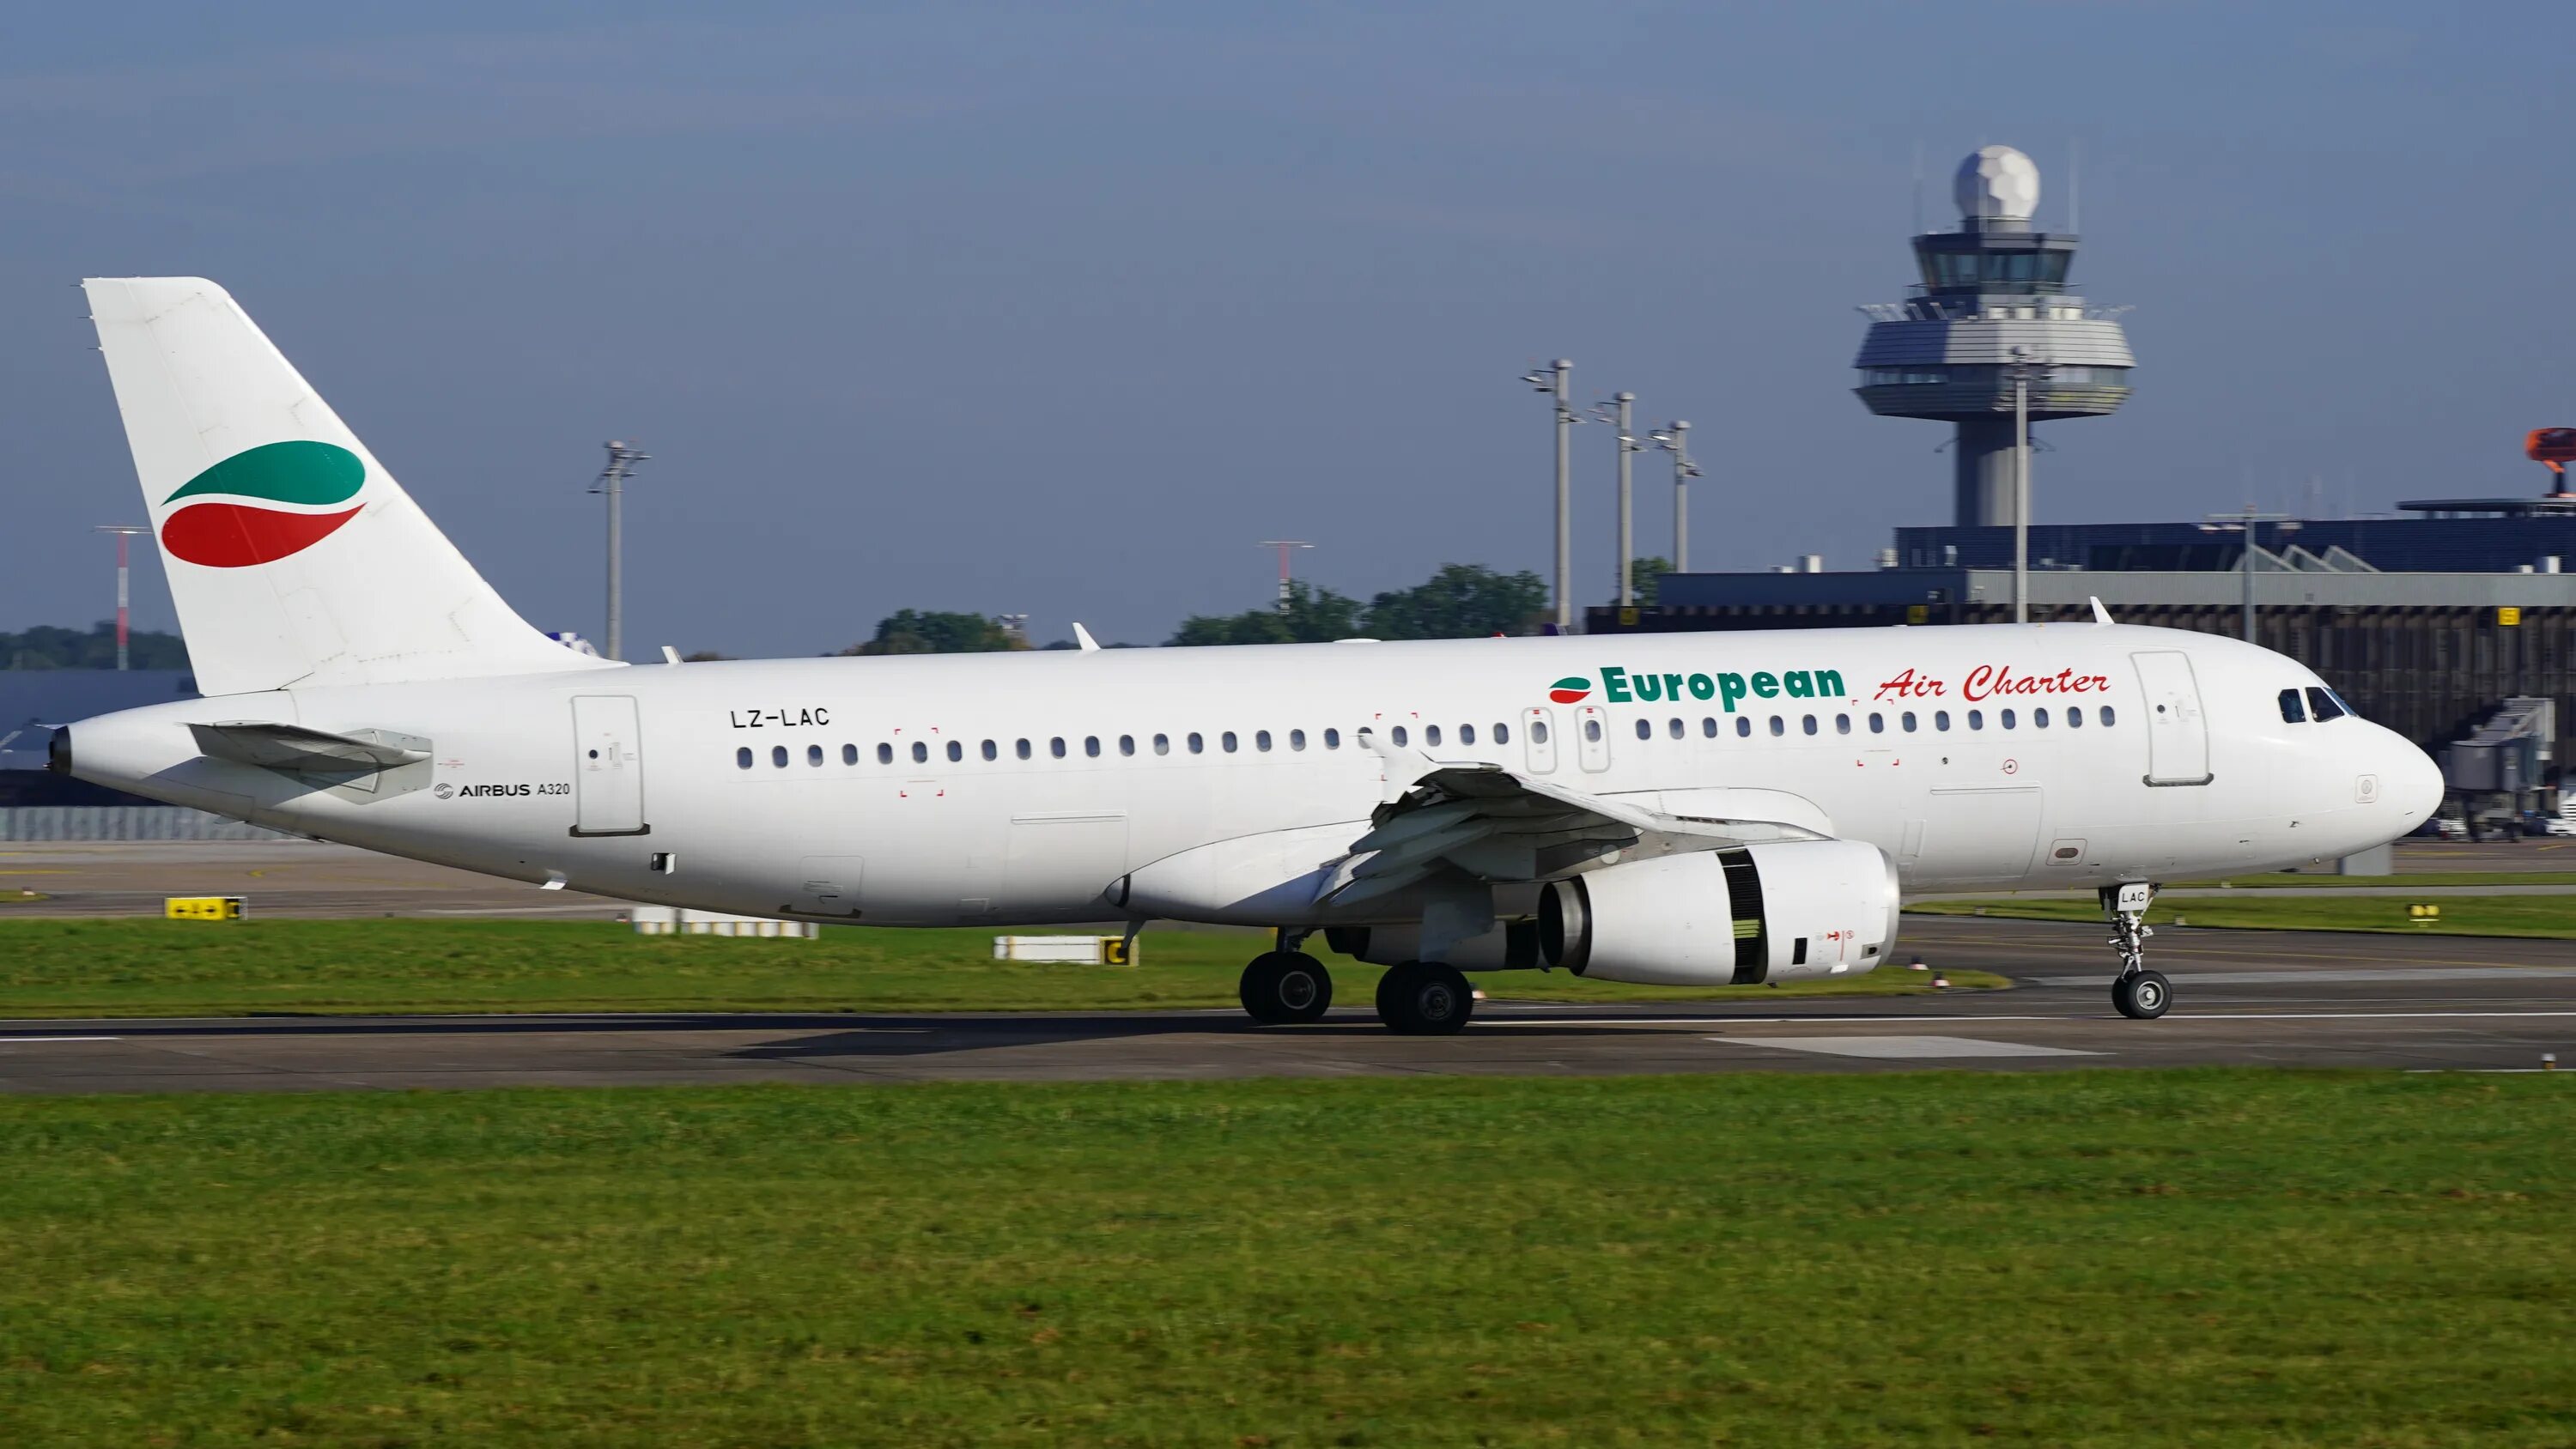 Эйр чартер. European Air Charter md82. A320-231. Аэропорт Ганновер. Bulgarian Air Charter.